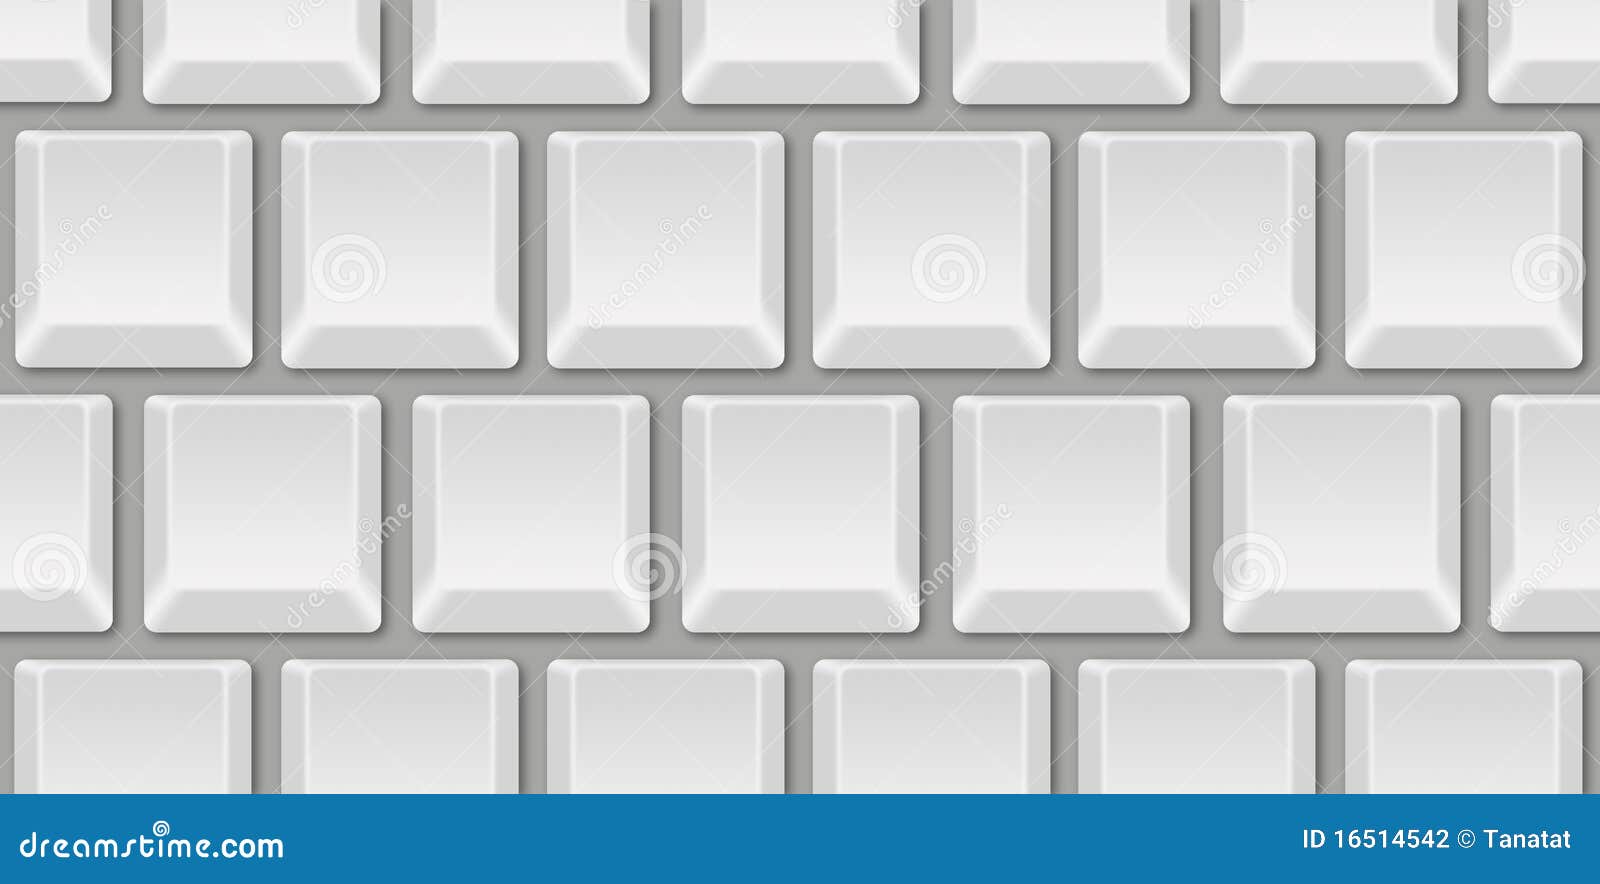 Blank Computer Keyboard stock illustration. Illustration ...